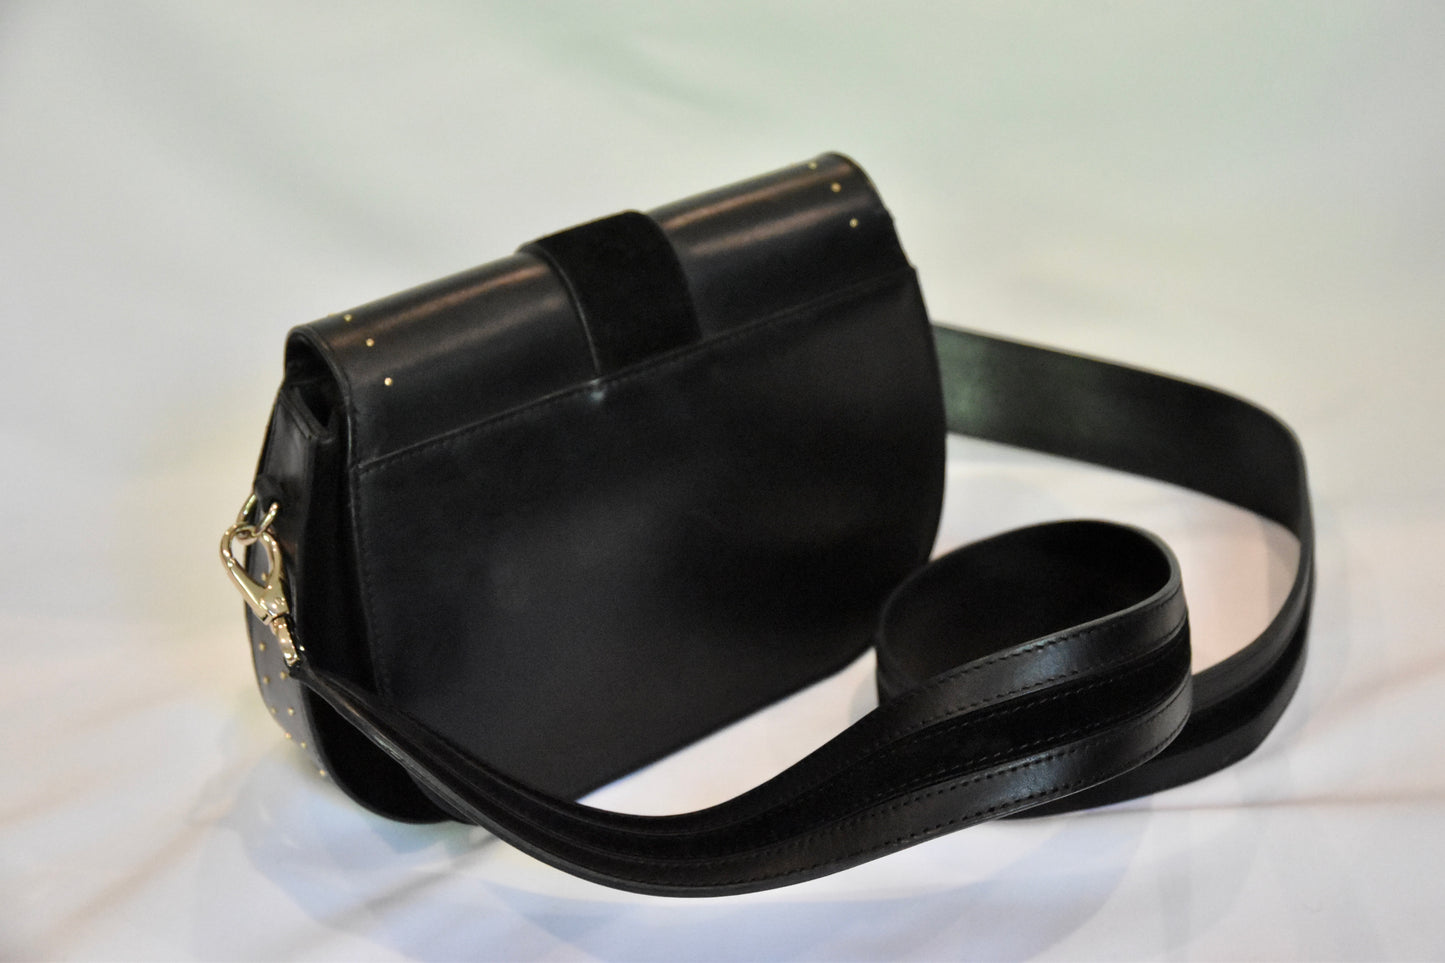 Sézane black 'Oli' handbag